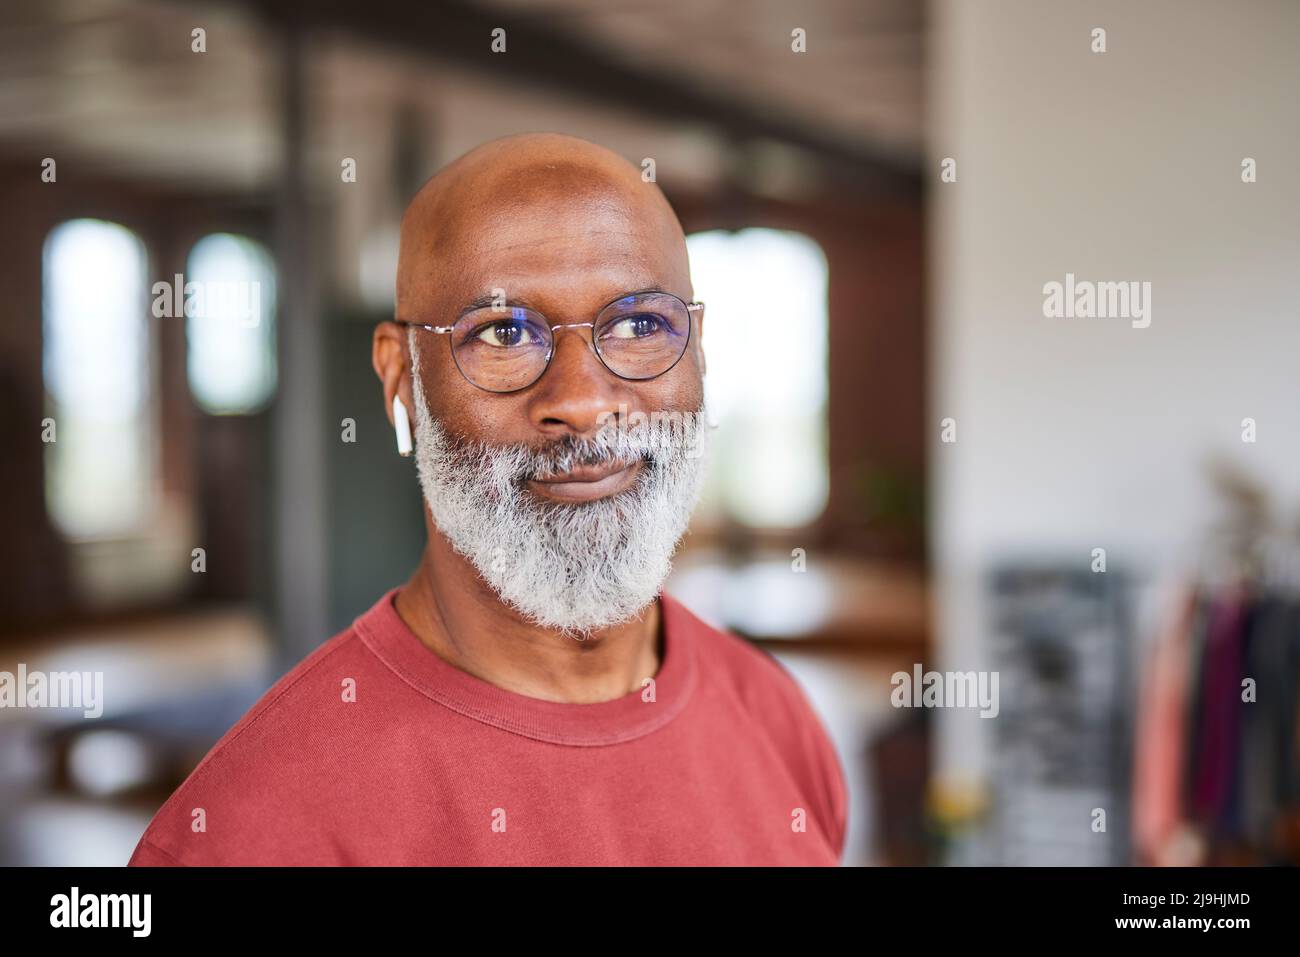 Smiling bald man with grey beard wearing eyeglasses at home Stock Photo